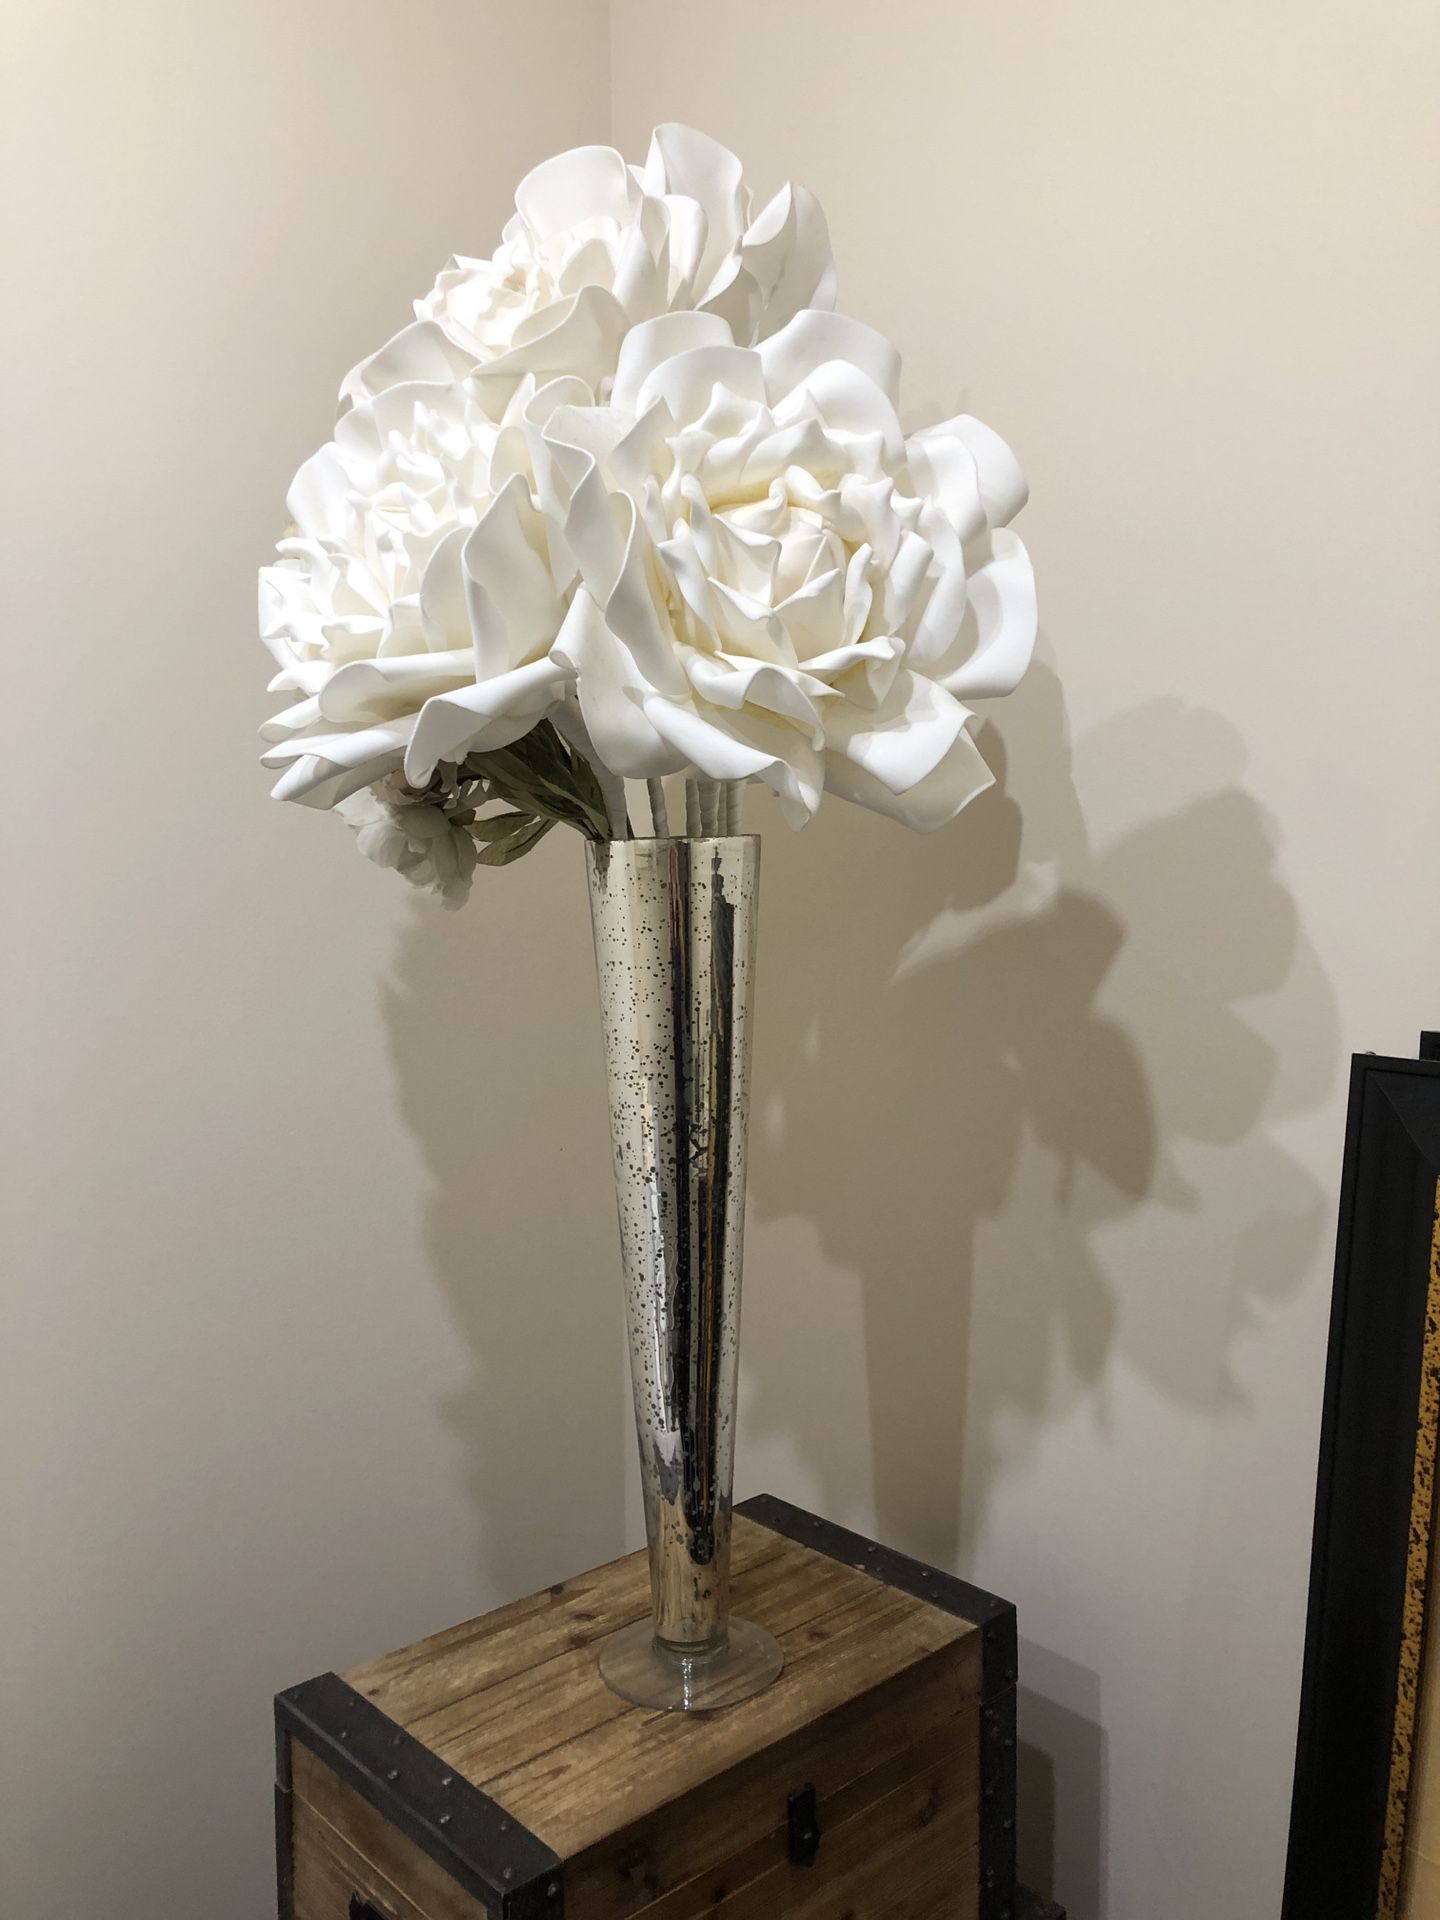 Zgallerie decorative flowers & vase